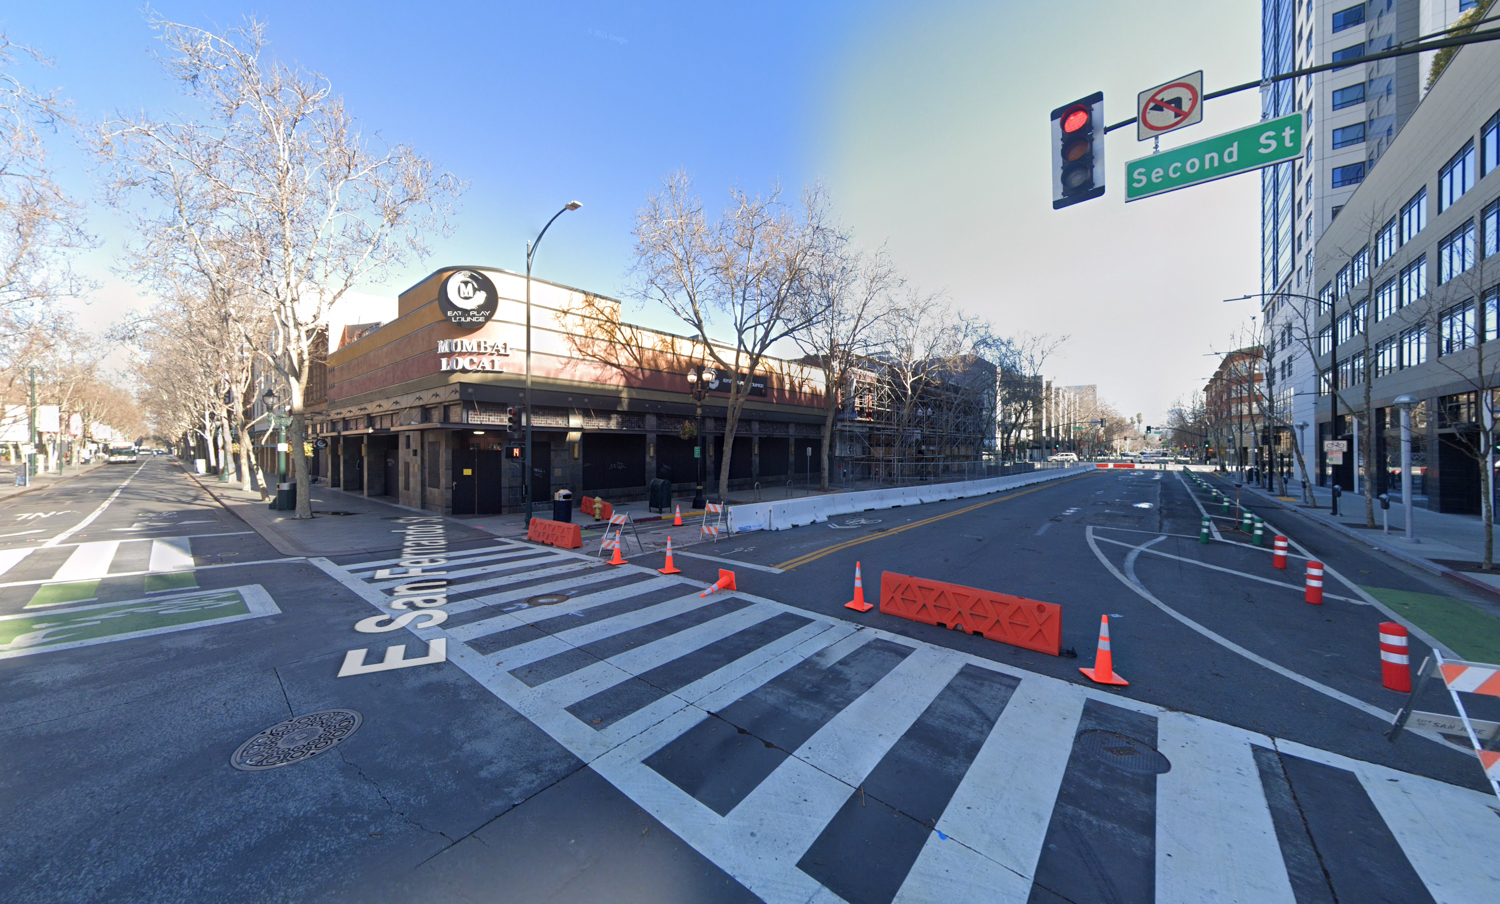 98 South 2nd Street, image via Google Street View